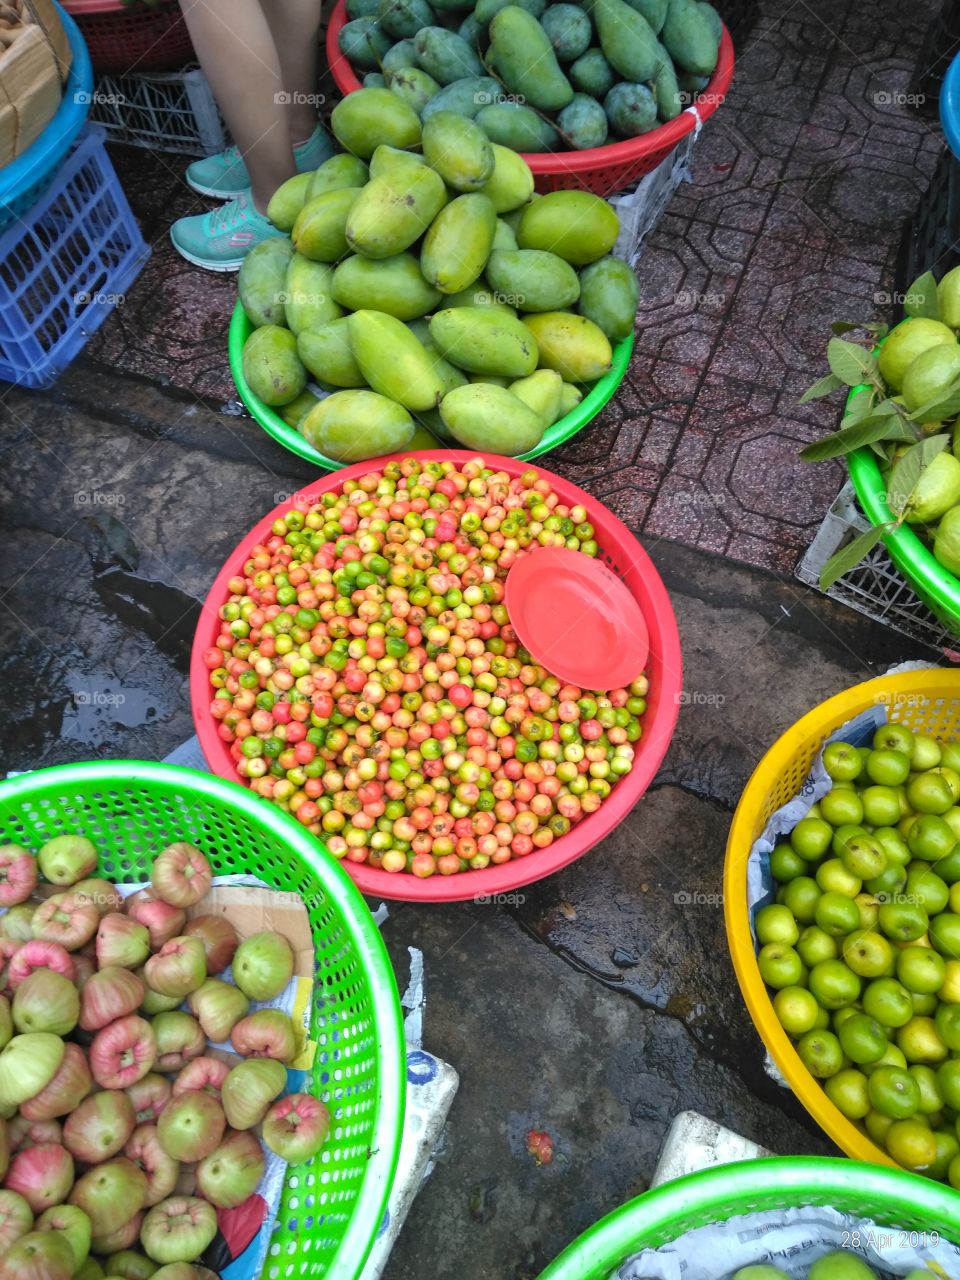 Kumquats at the market in Vietnam.
Colourful lil fruit 
#craftyartificer
#fruit